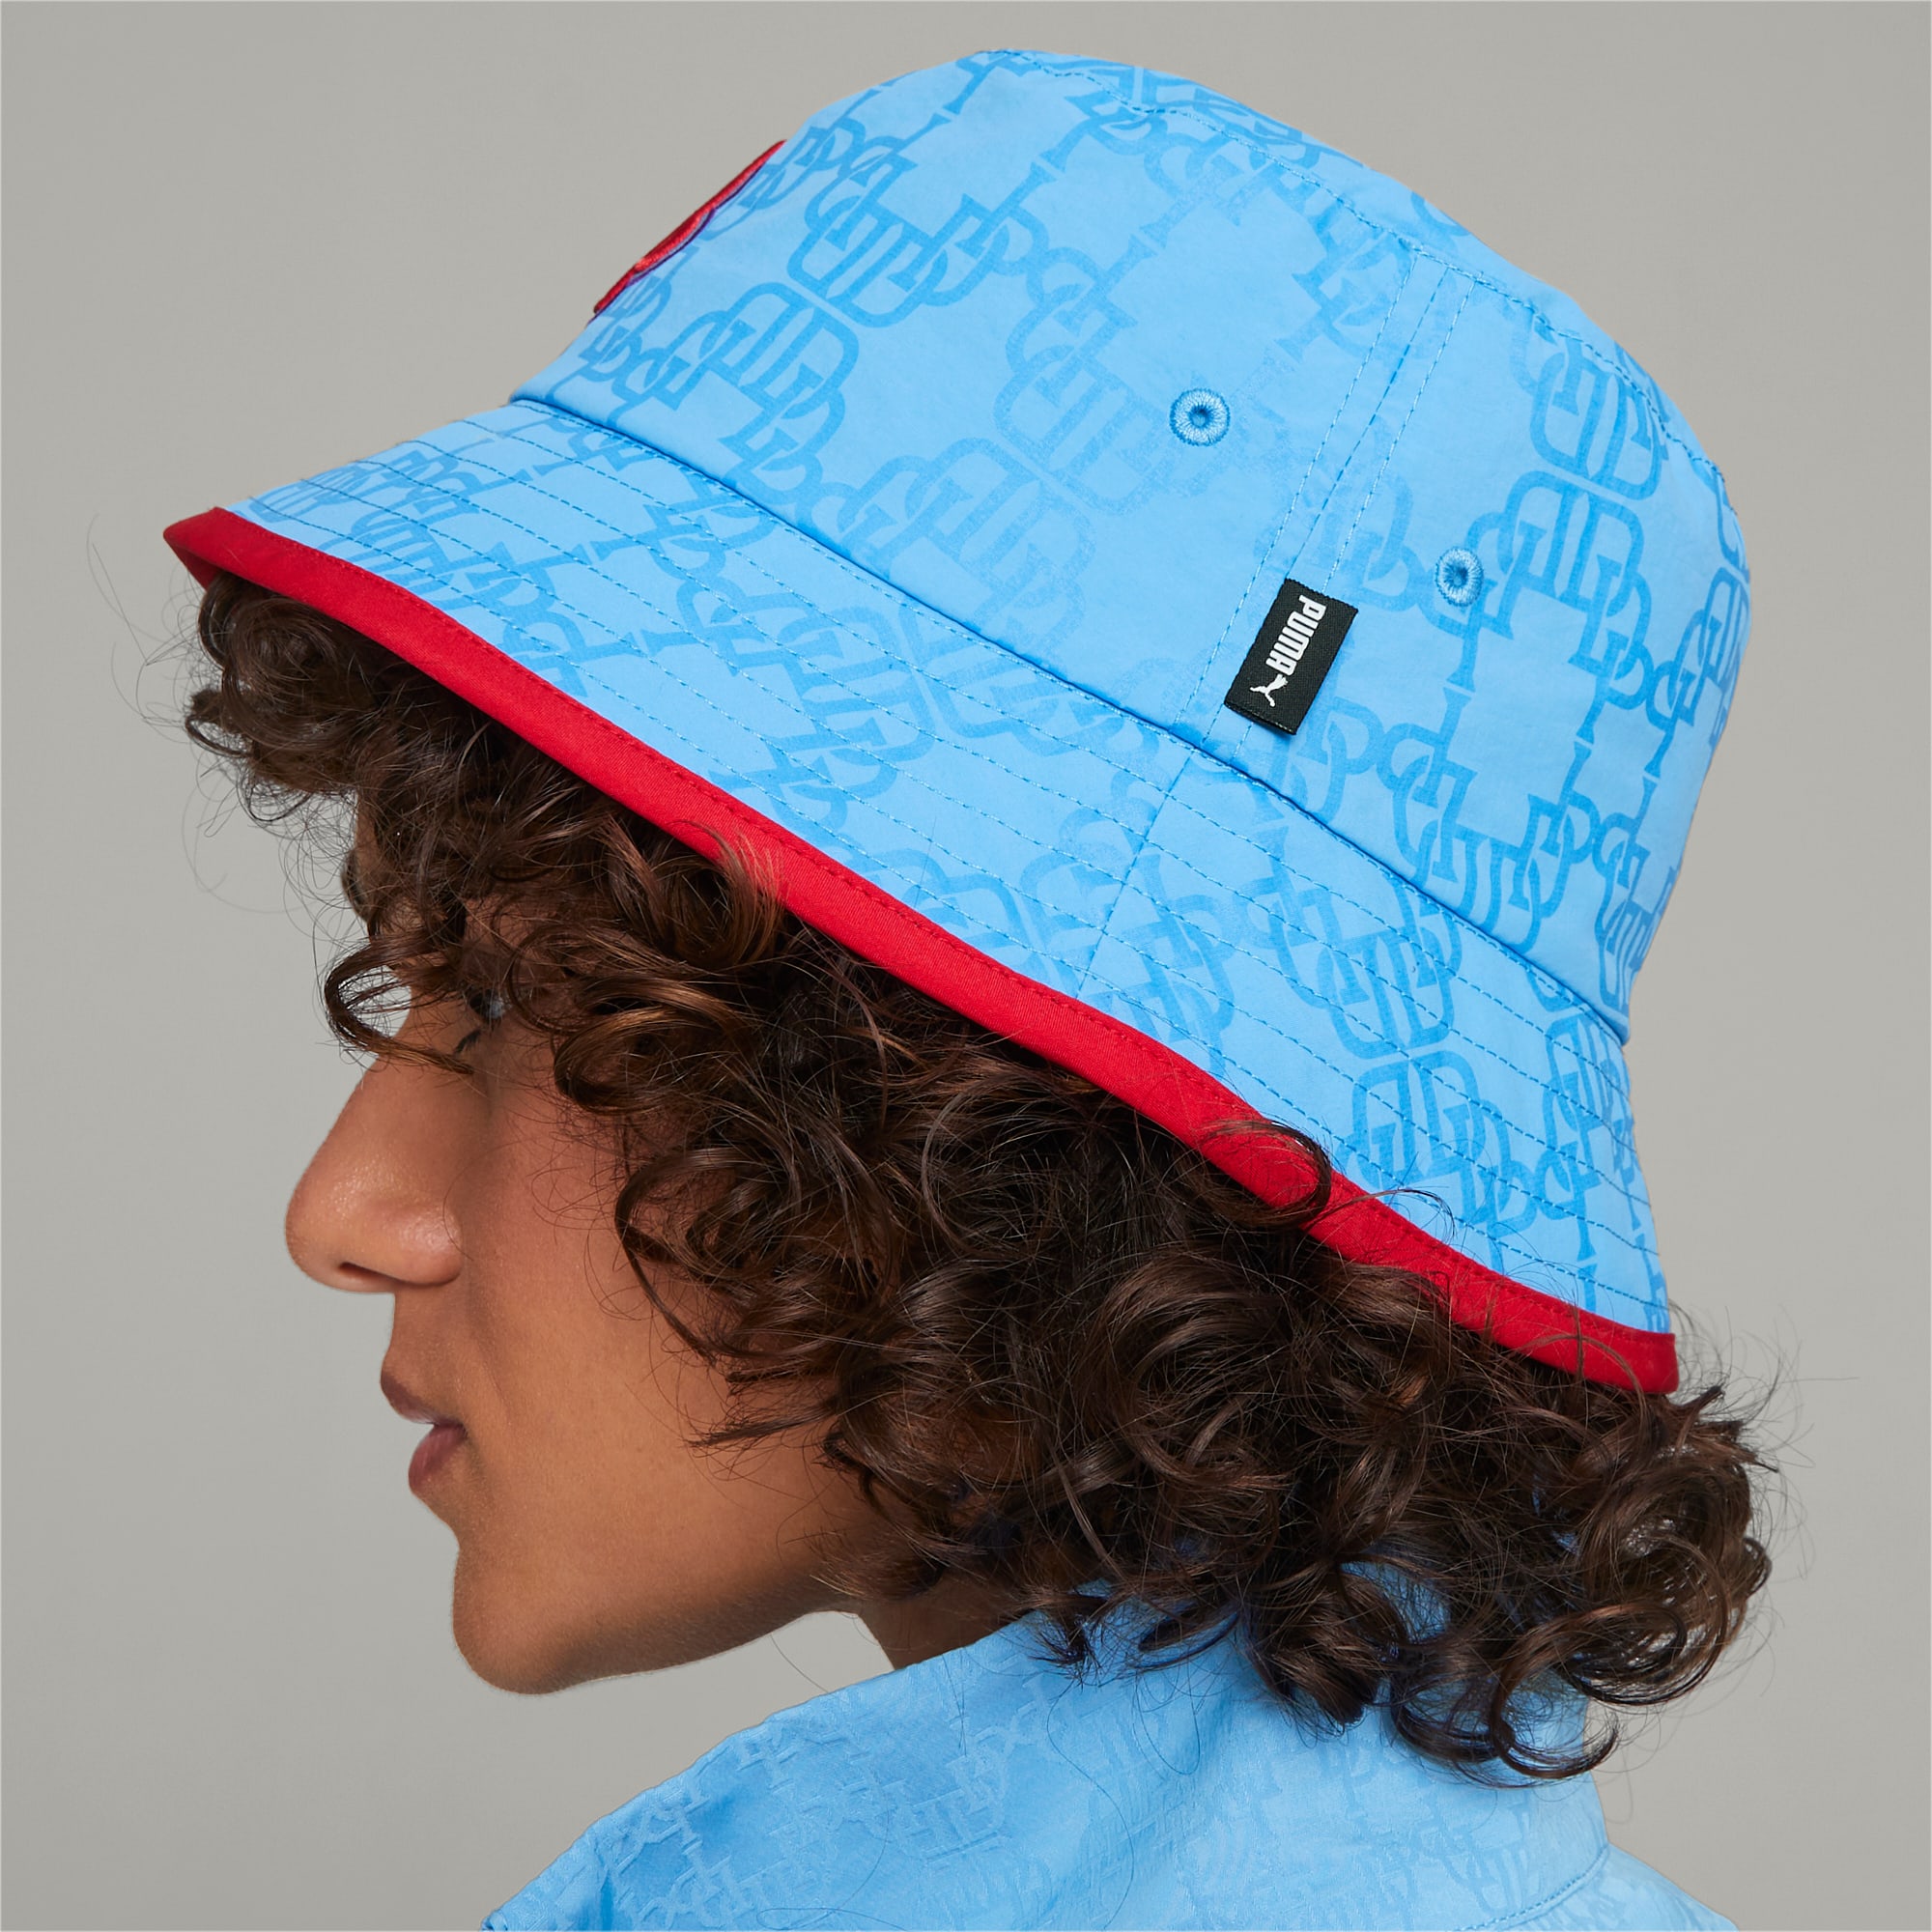 PUMA X DAPPER DAN Bucket Hat, Blau, Größe: S/M, Accessoires